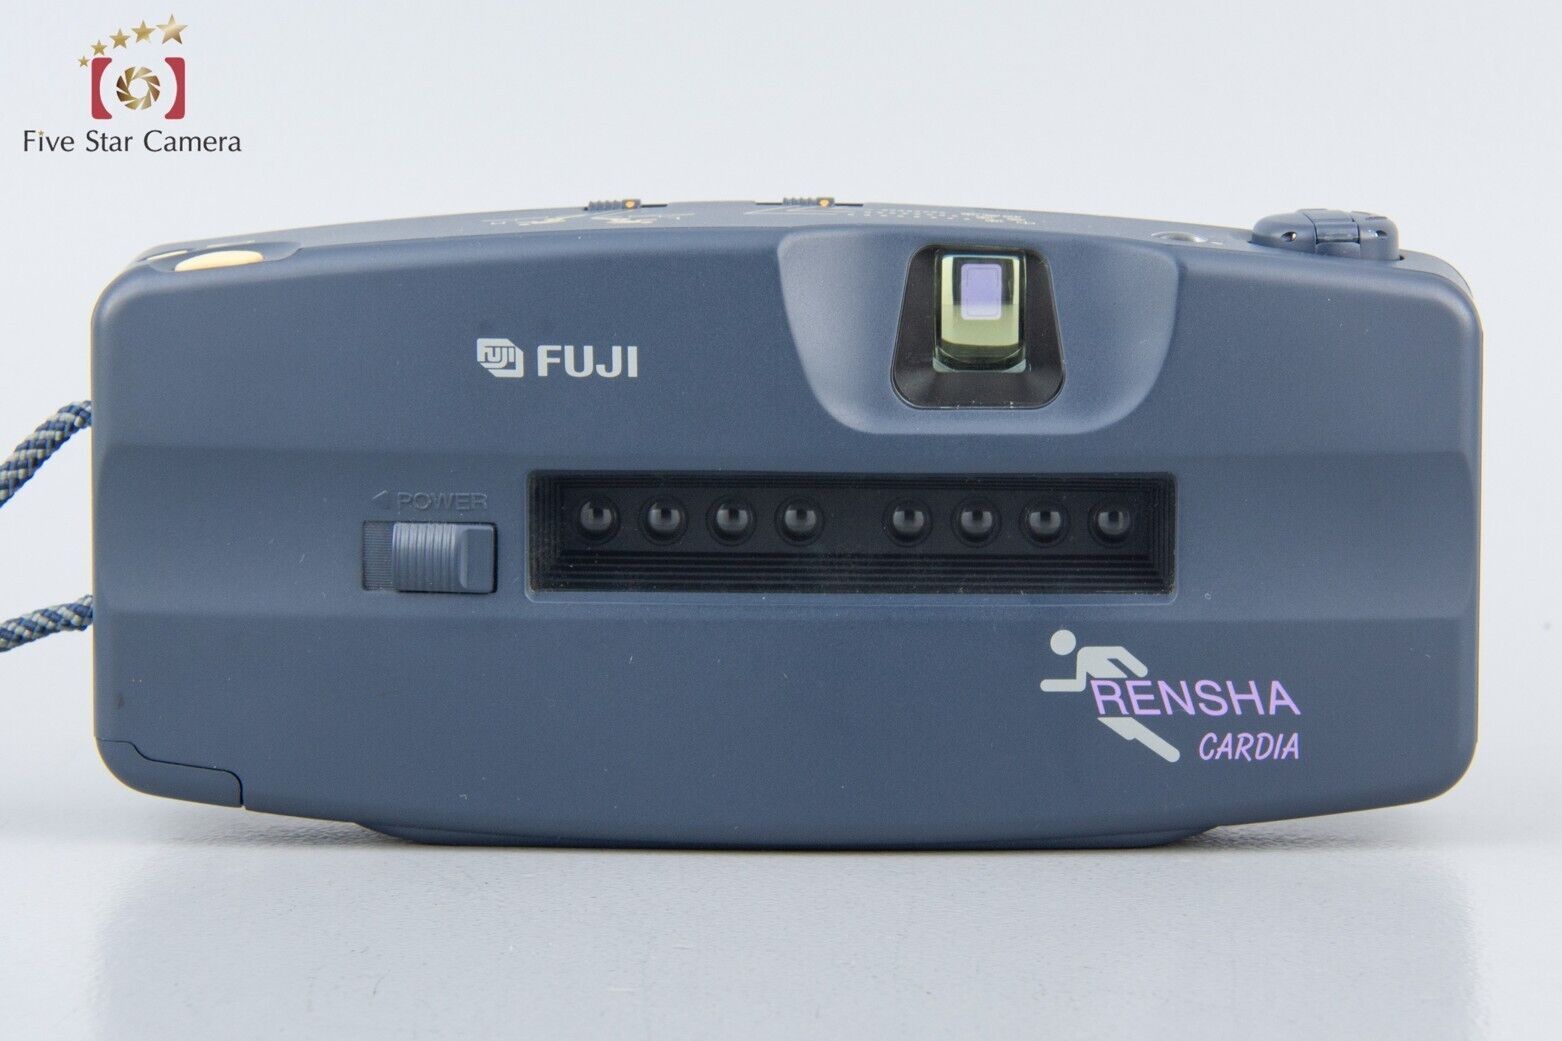 Fujifilm RENSHA CARDIA Byu-N 8 35mm Point & Shoot Film Camera